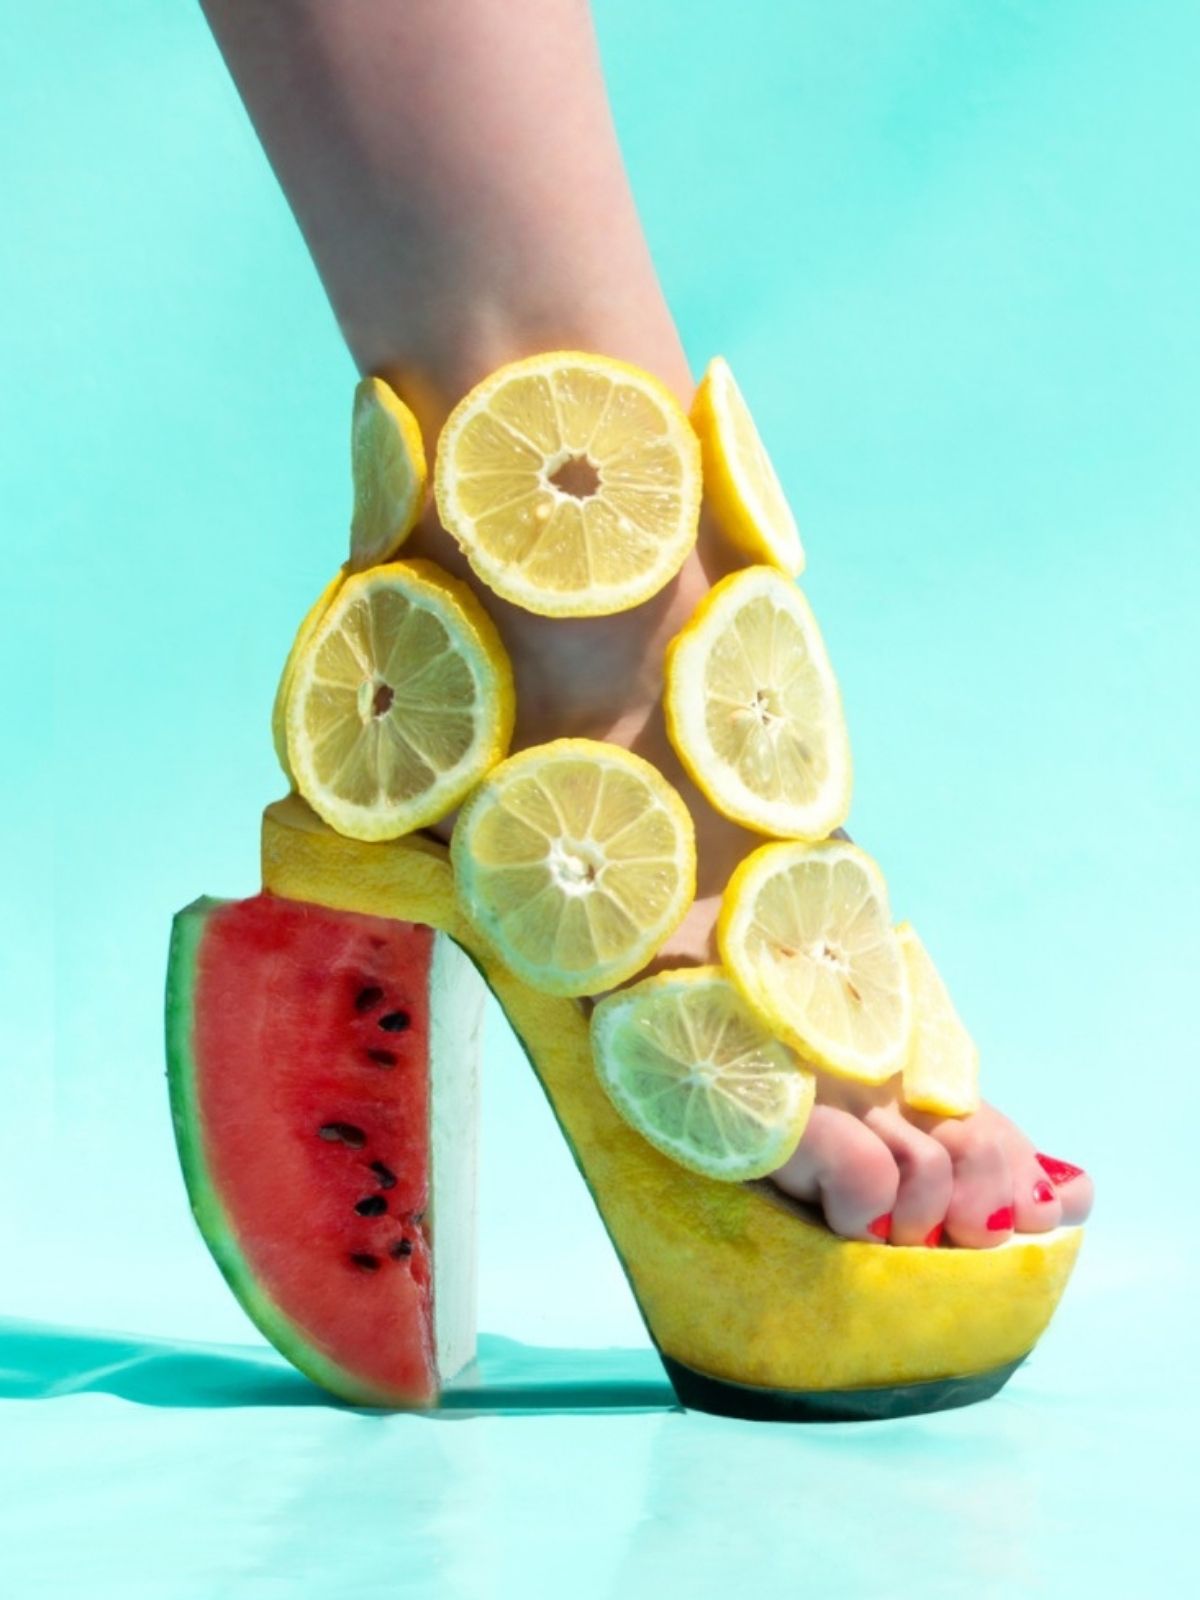 Make a Fashion Statement With These Unique Green Slippers - fruit shoes - Pantoufle de Vert article on thursd